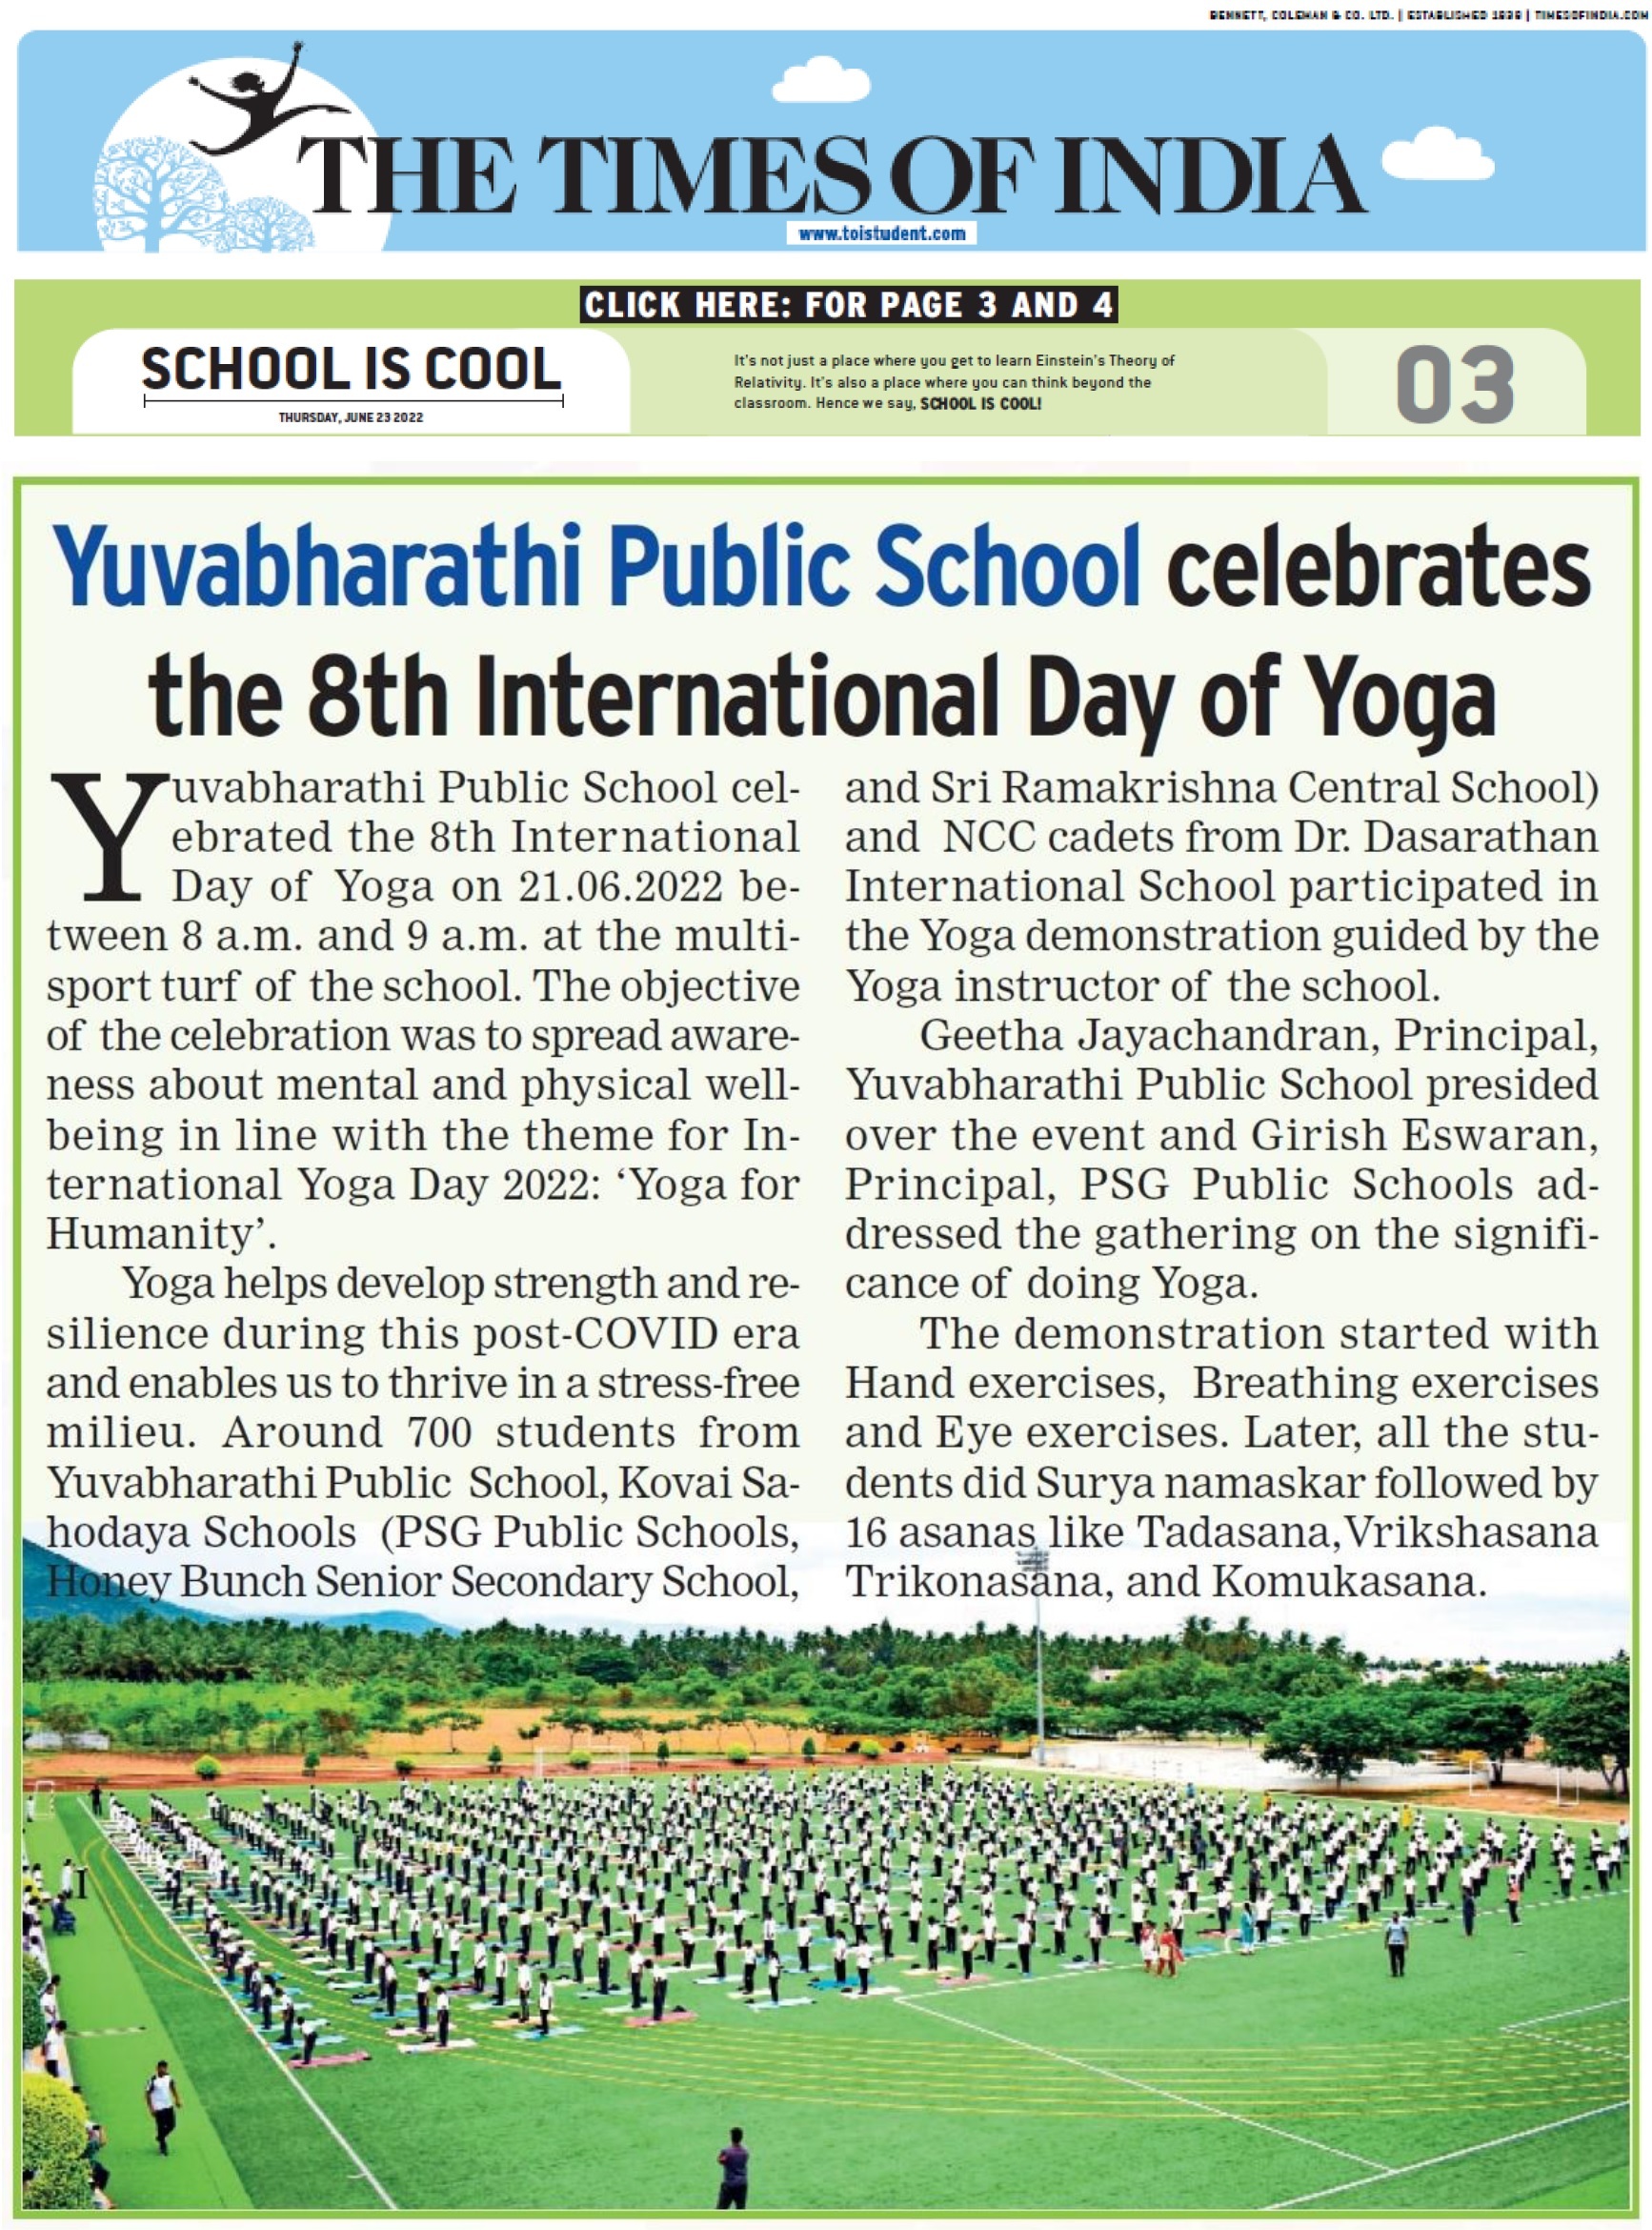 Yuvabharathi Public School